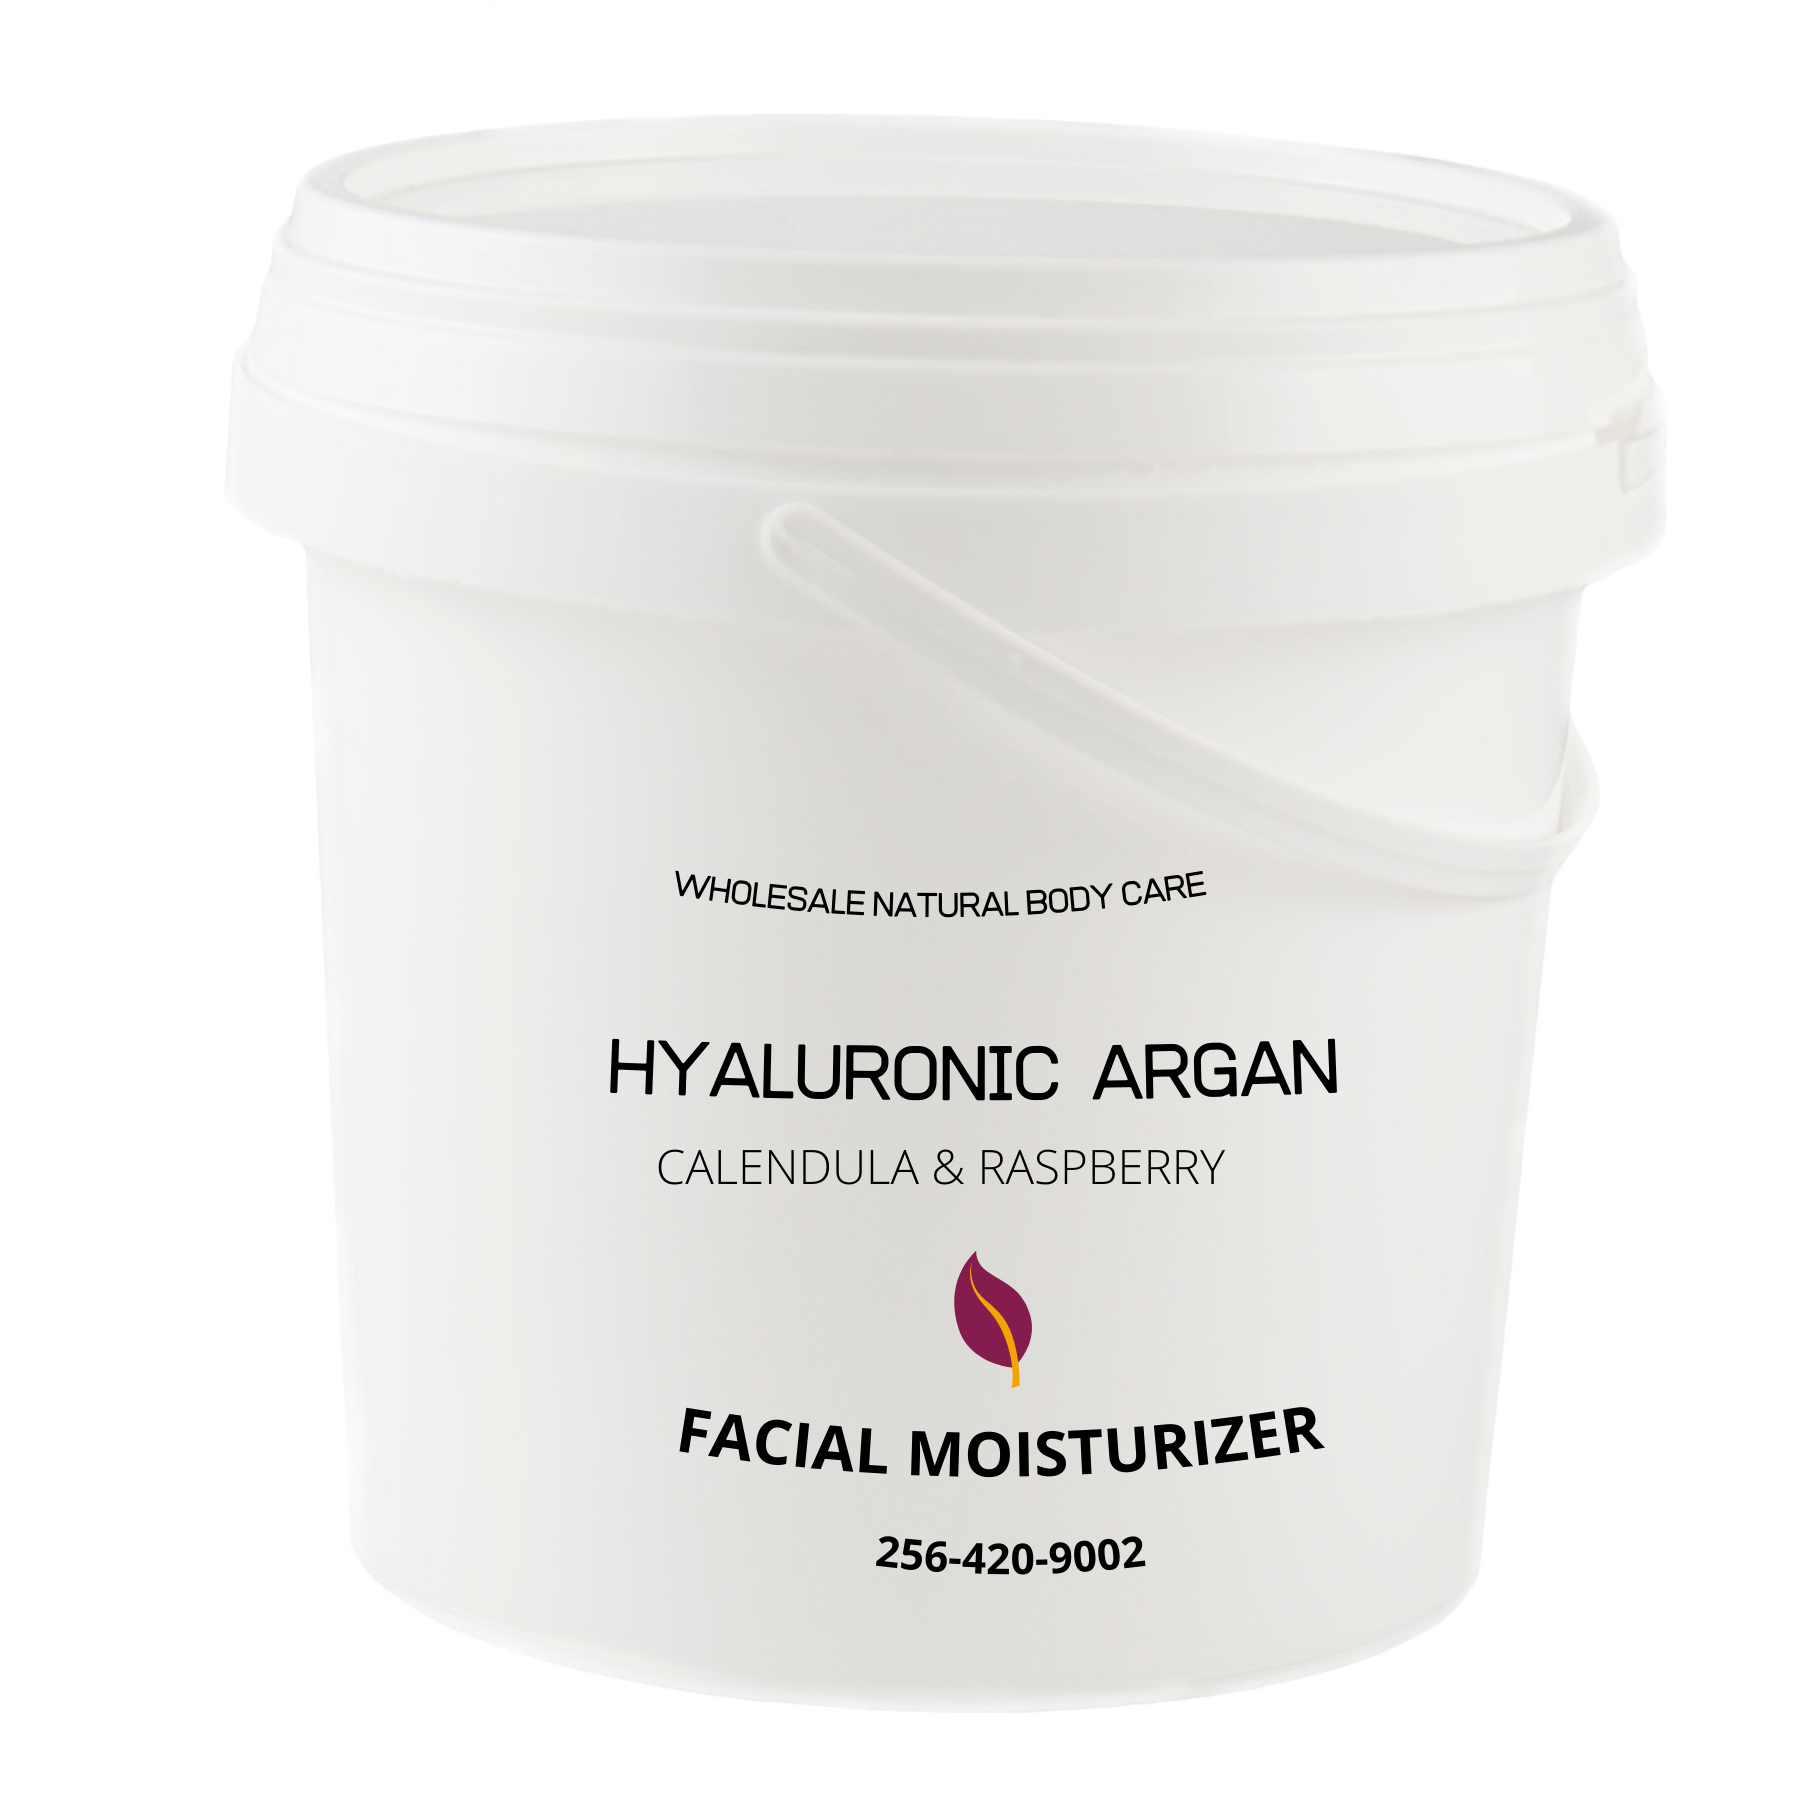 Hyaluronic Argan Calendula & Raspberry Facial Moisturizer